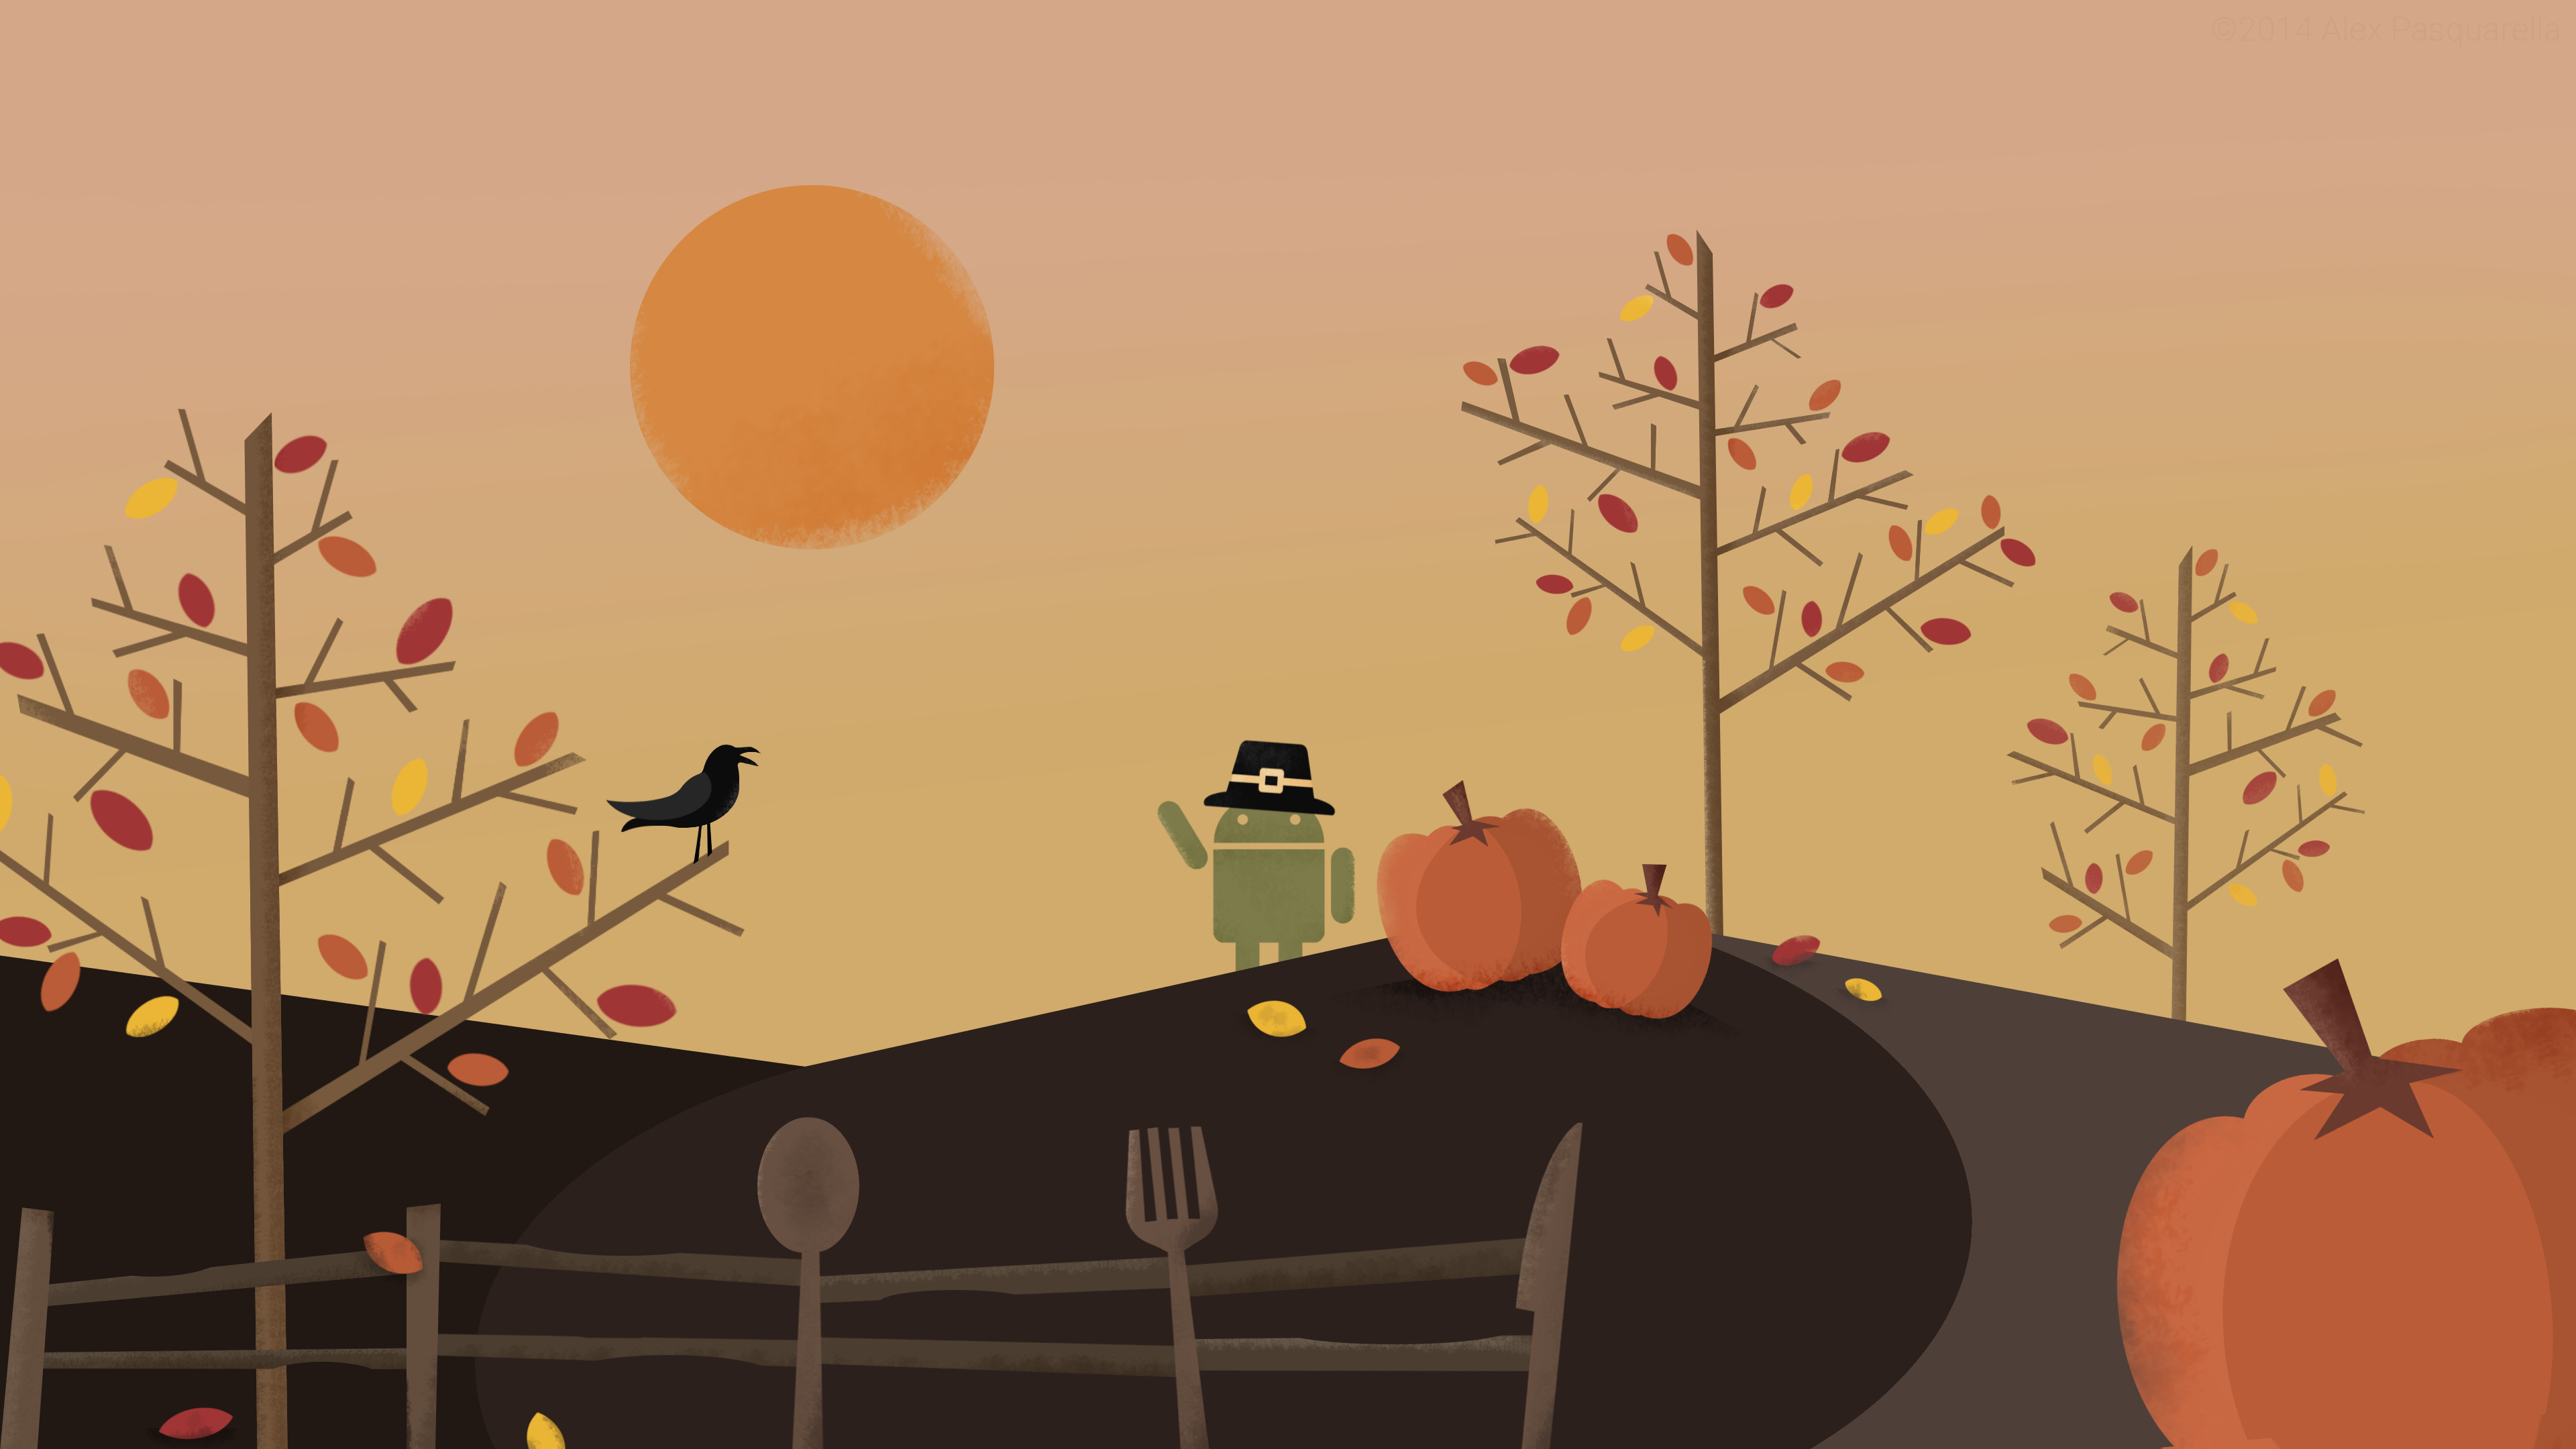 3840x2160 Thanksgiving Animated Wallpaper | Thanksgiving Day | Pinterest |  Thanksgiving wallpaper, Wallpaper and Wallpaper backgrounds